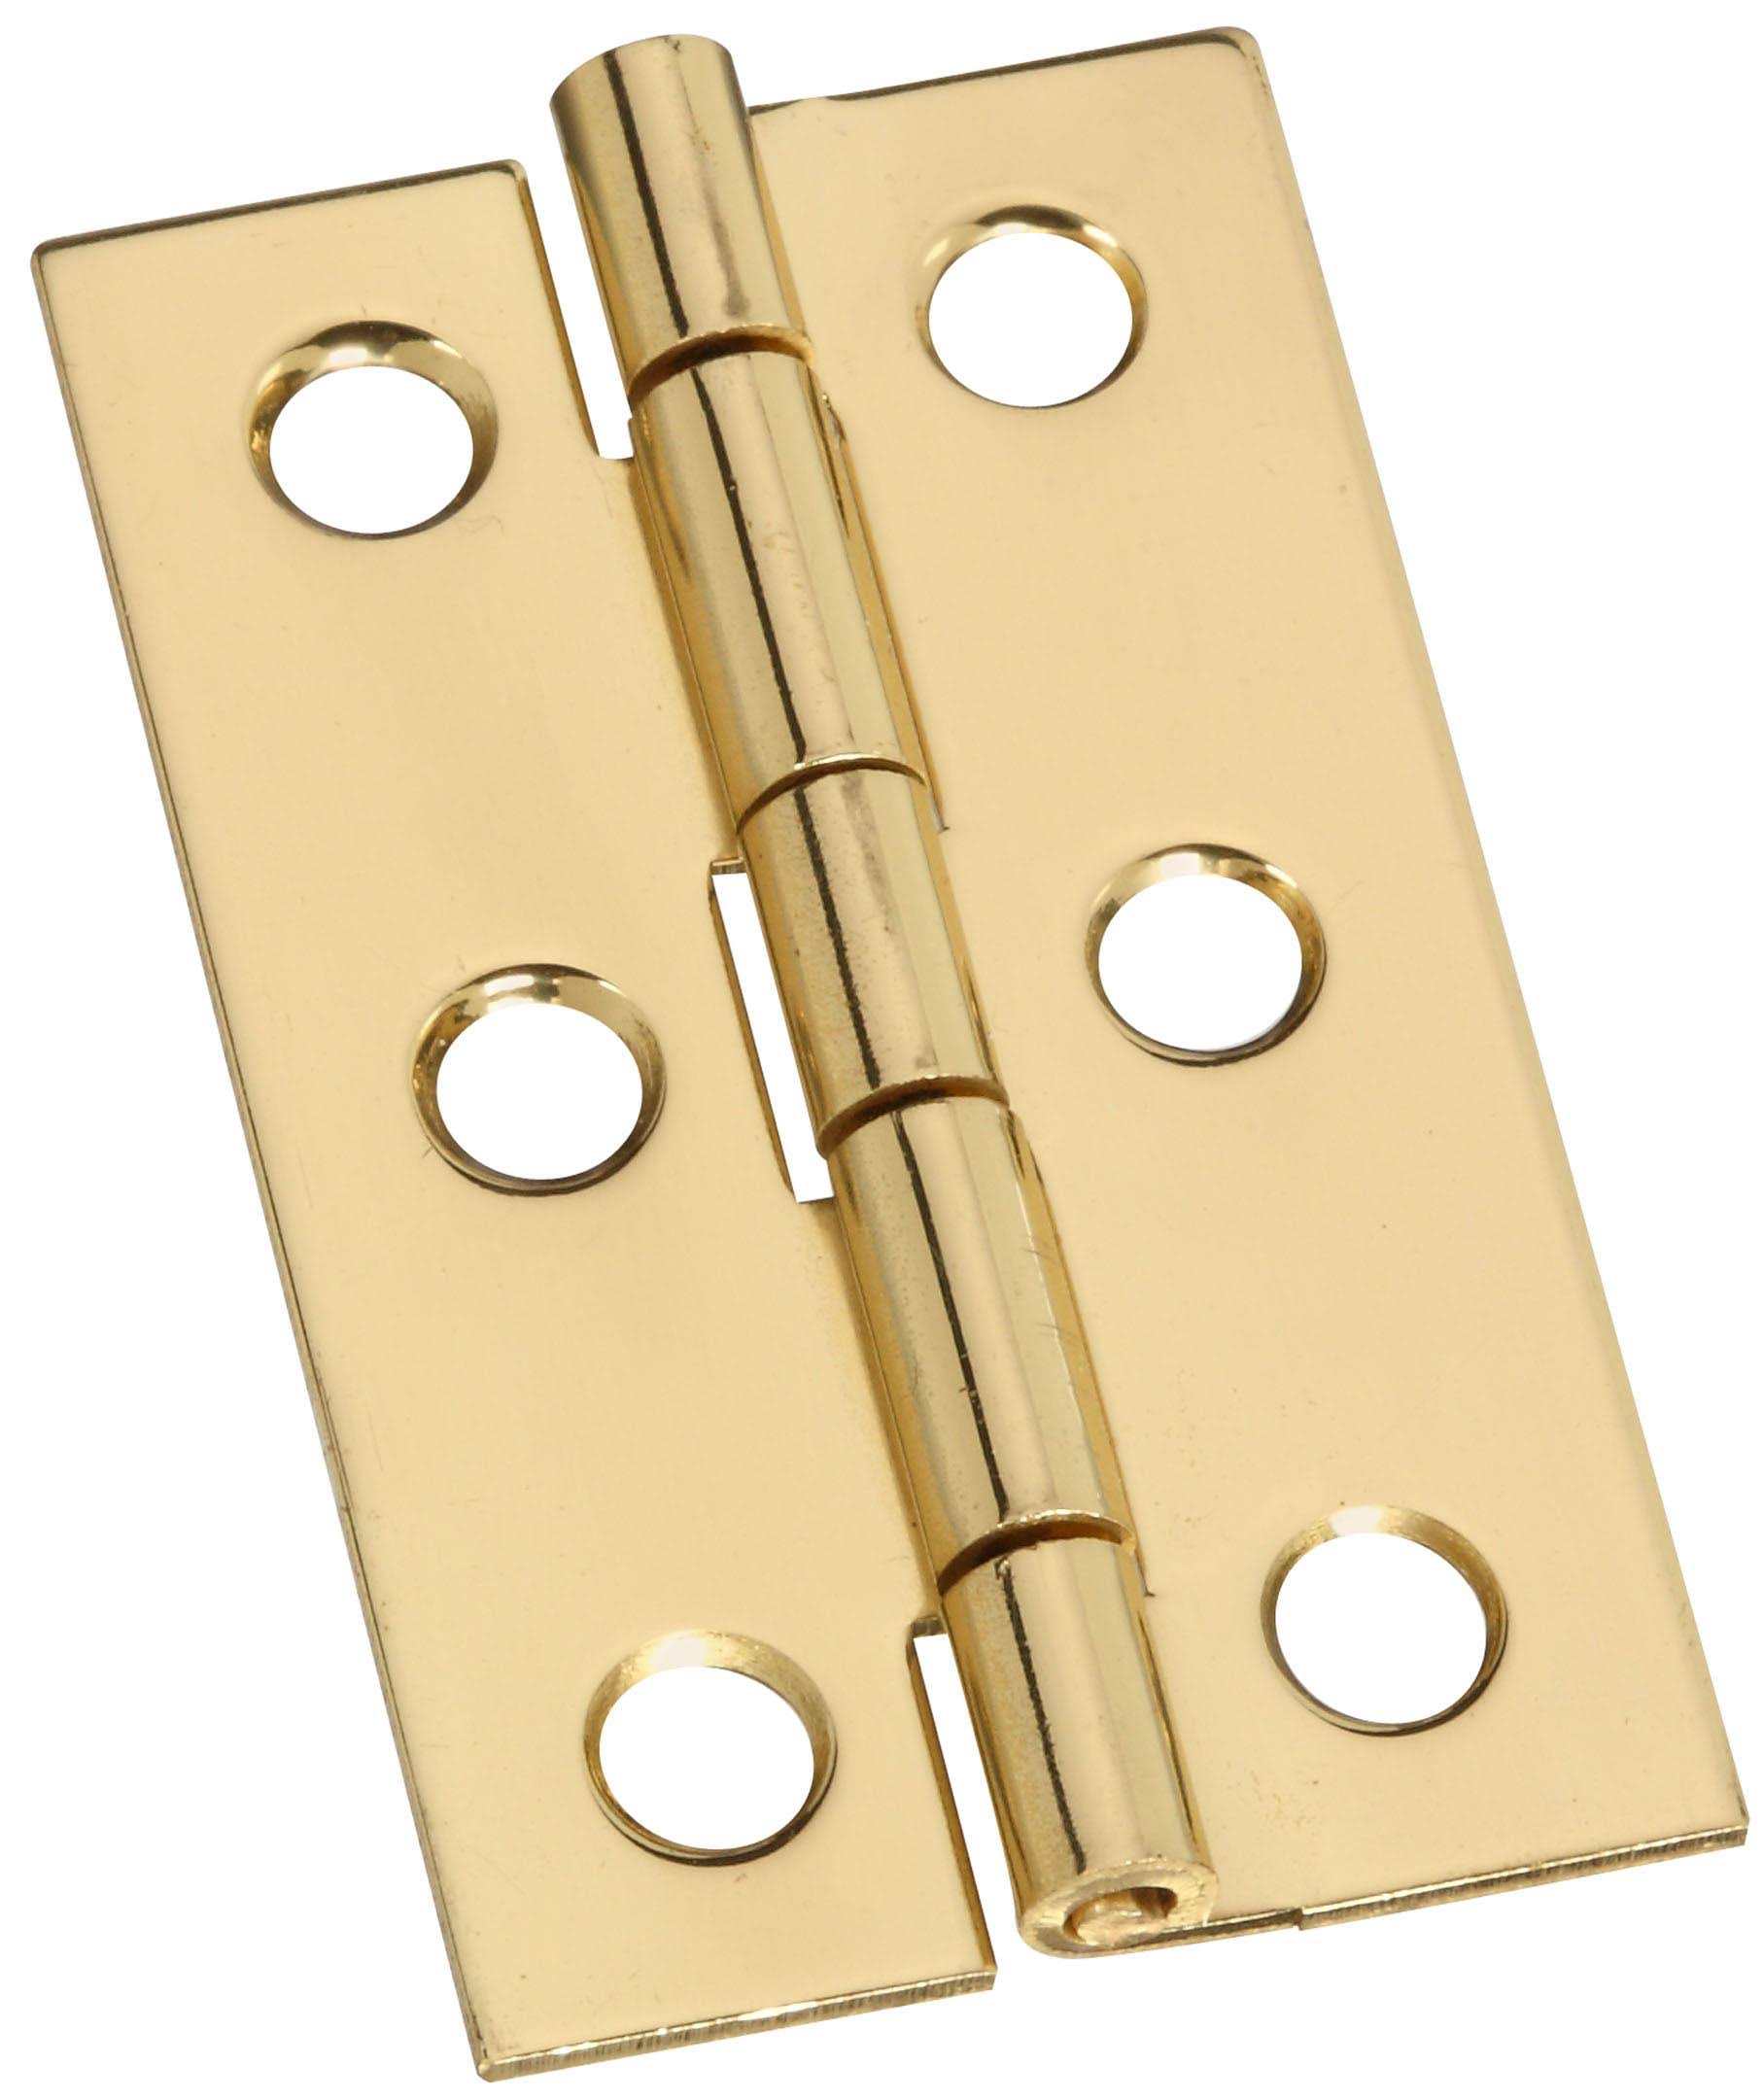 National Hardware Medium Hinges - Brass, 2"x 1 3/16"